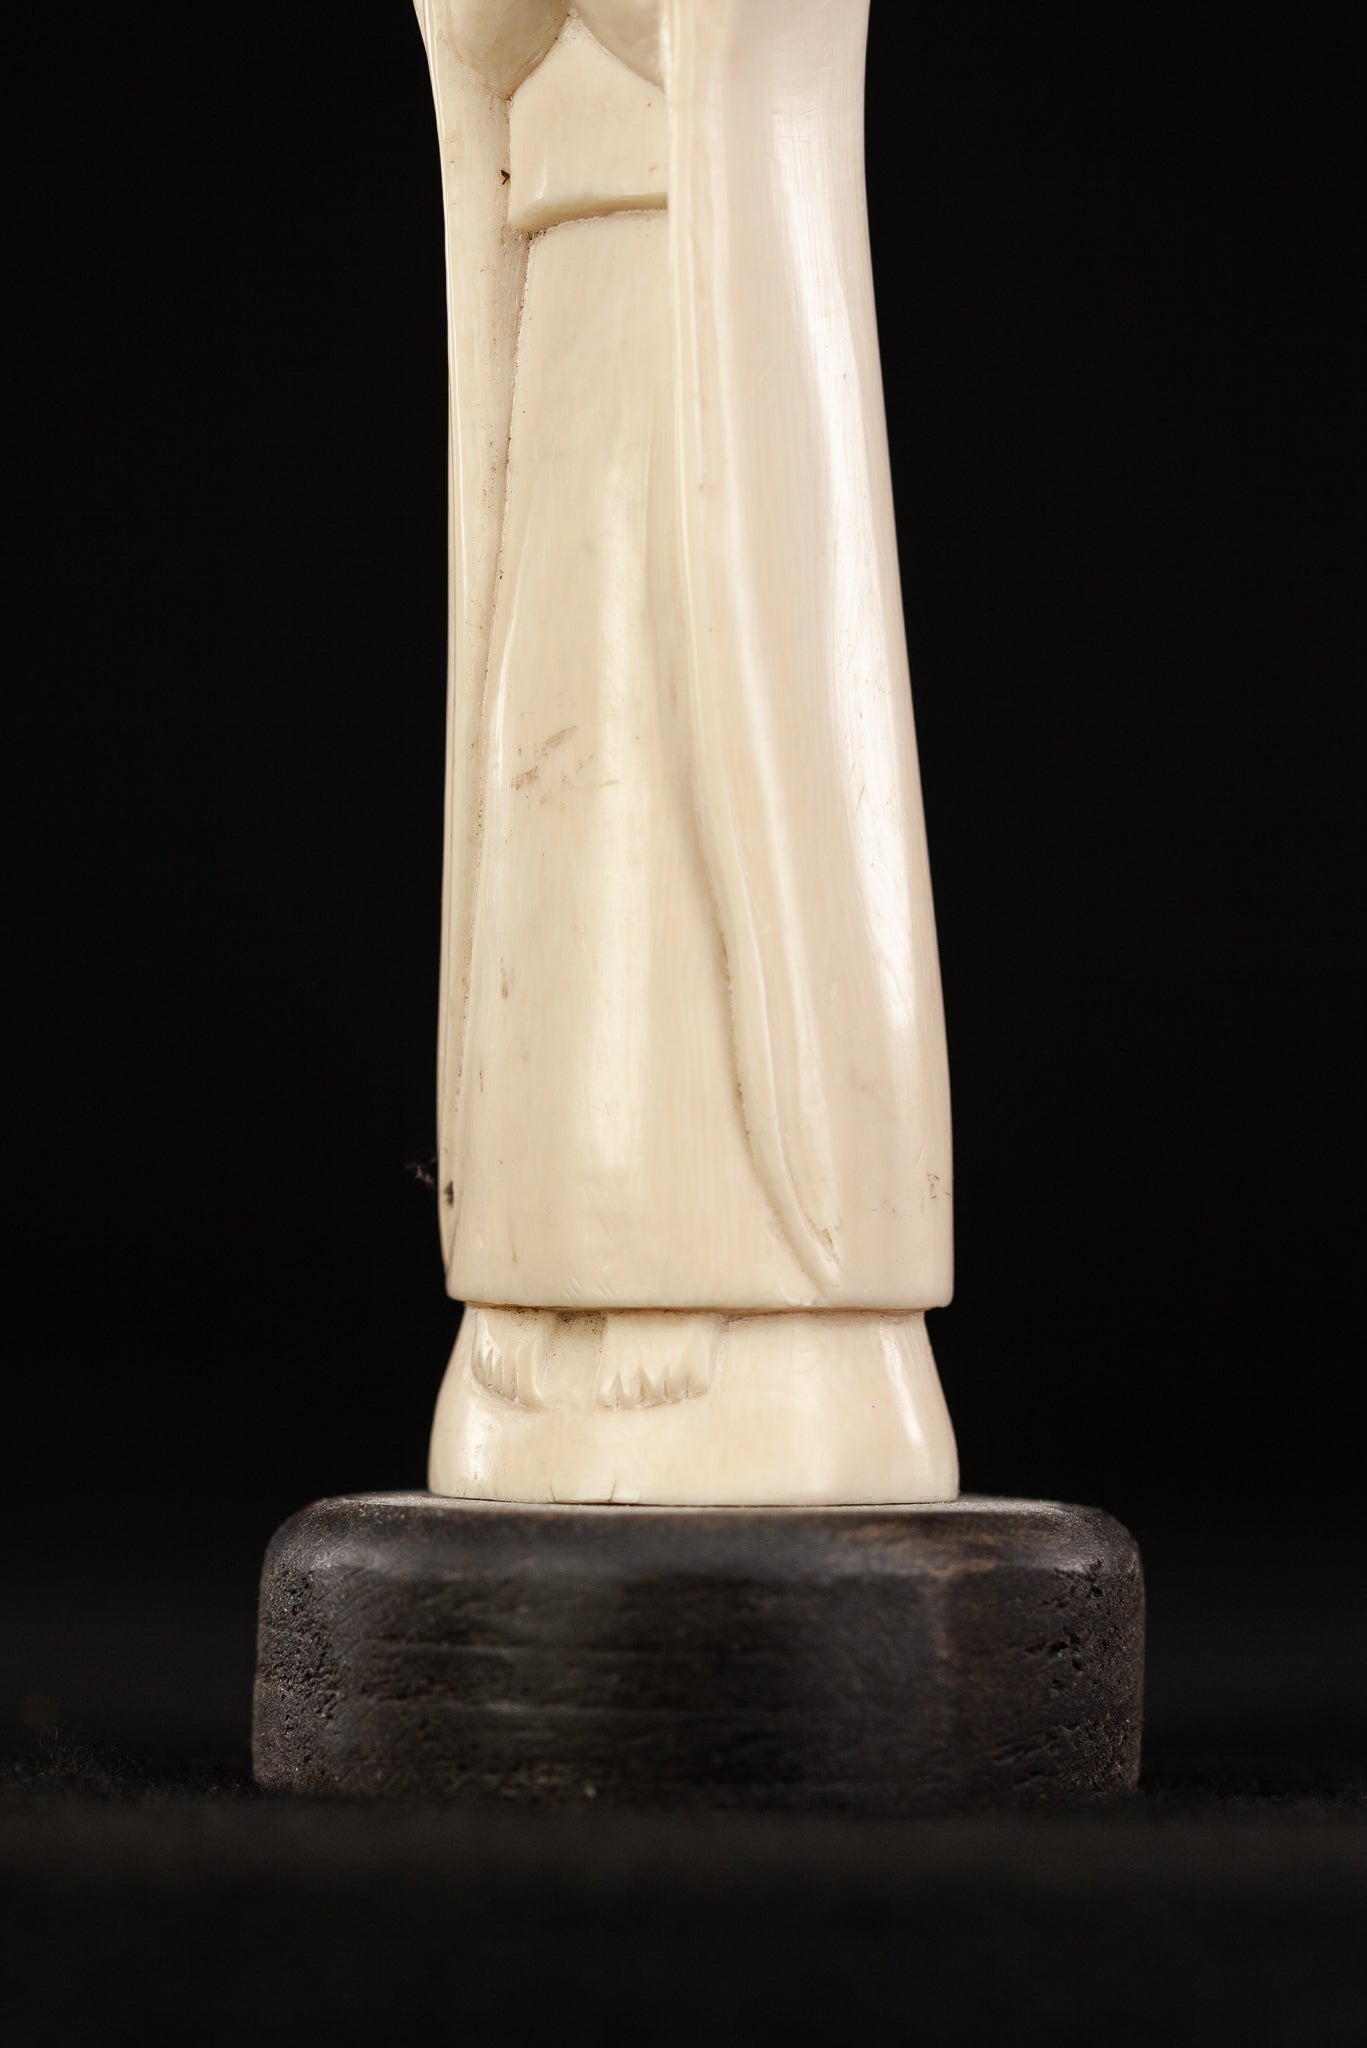 Virgin Mary Dieppe Carving Sculpture